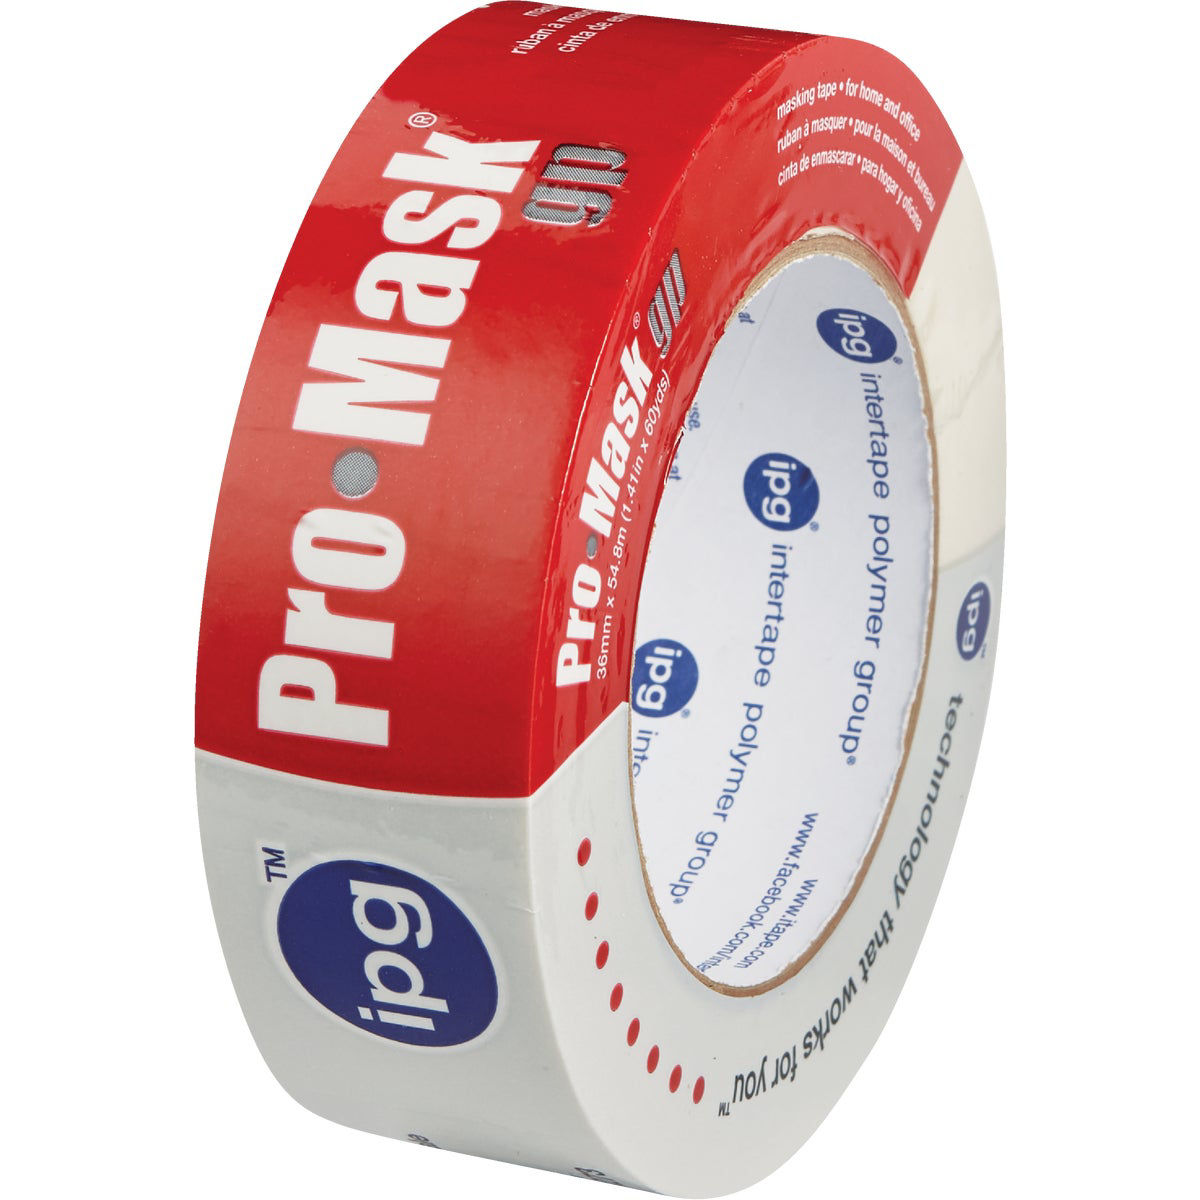 IPG ProMask GP, General Purpose Masking Tape, 1.41 x 60 yd (Single Roll)